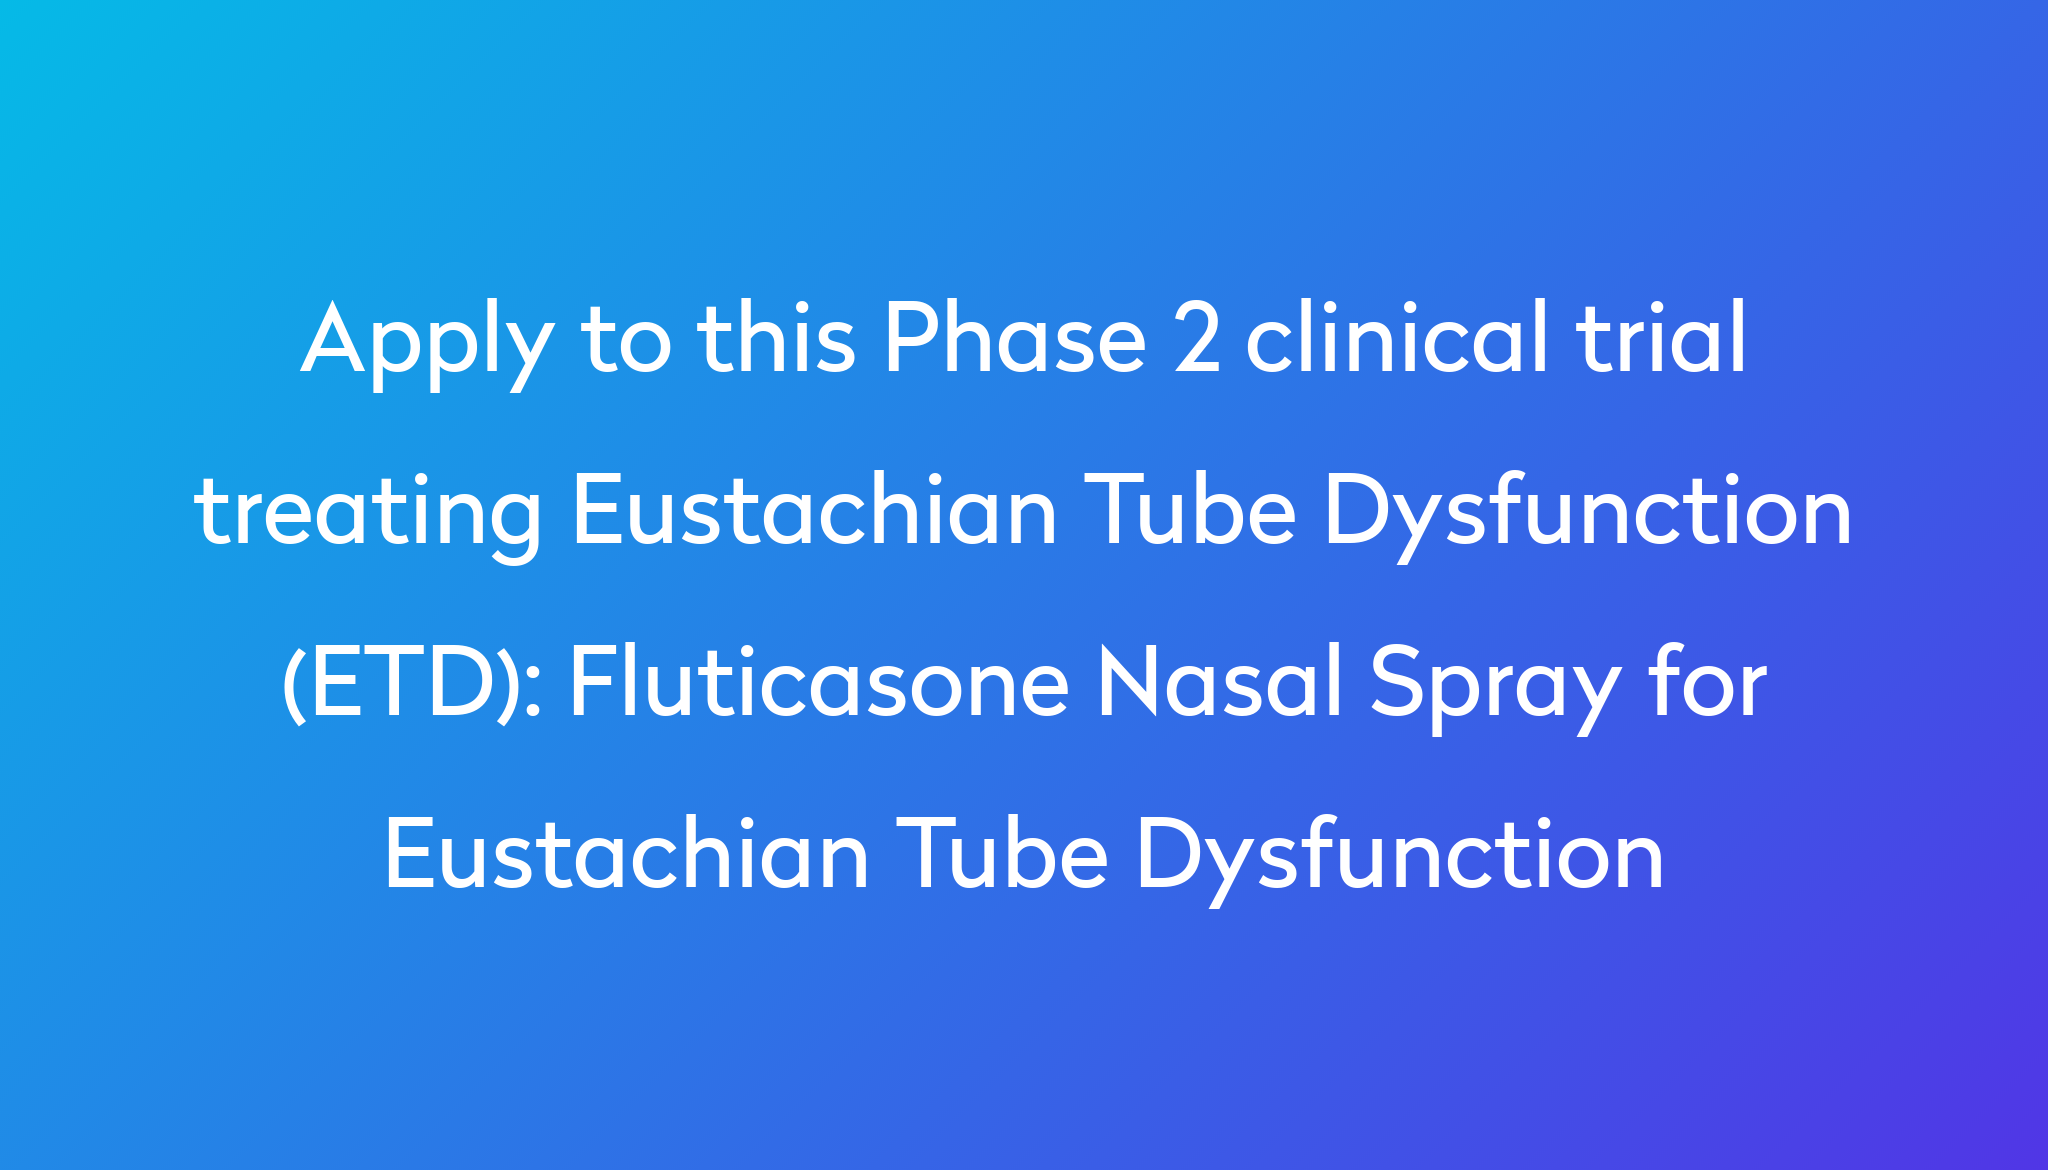 Fluticasone Nasal Spray for Eustachian Tube Dysfunction Clinical Trial